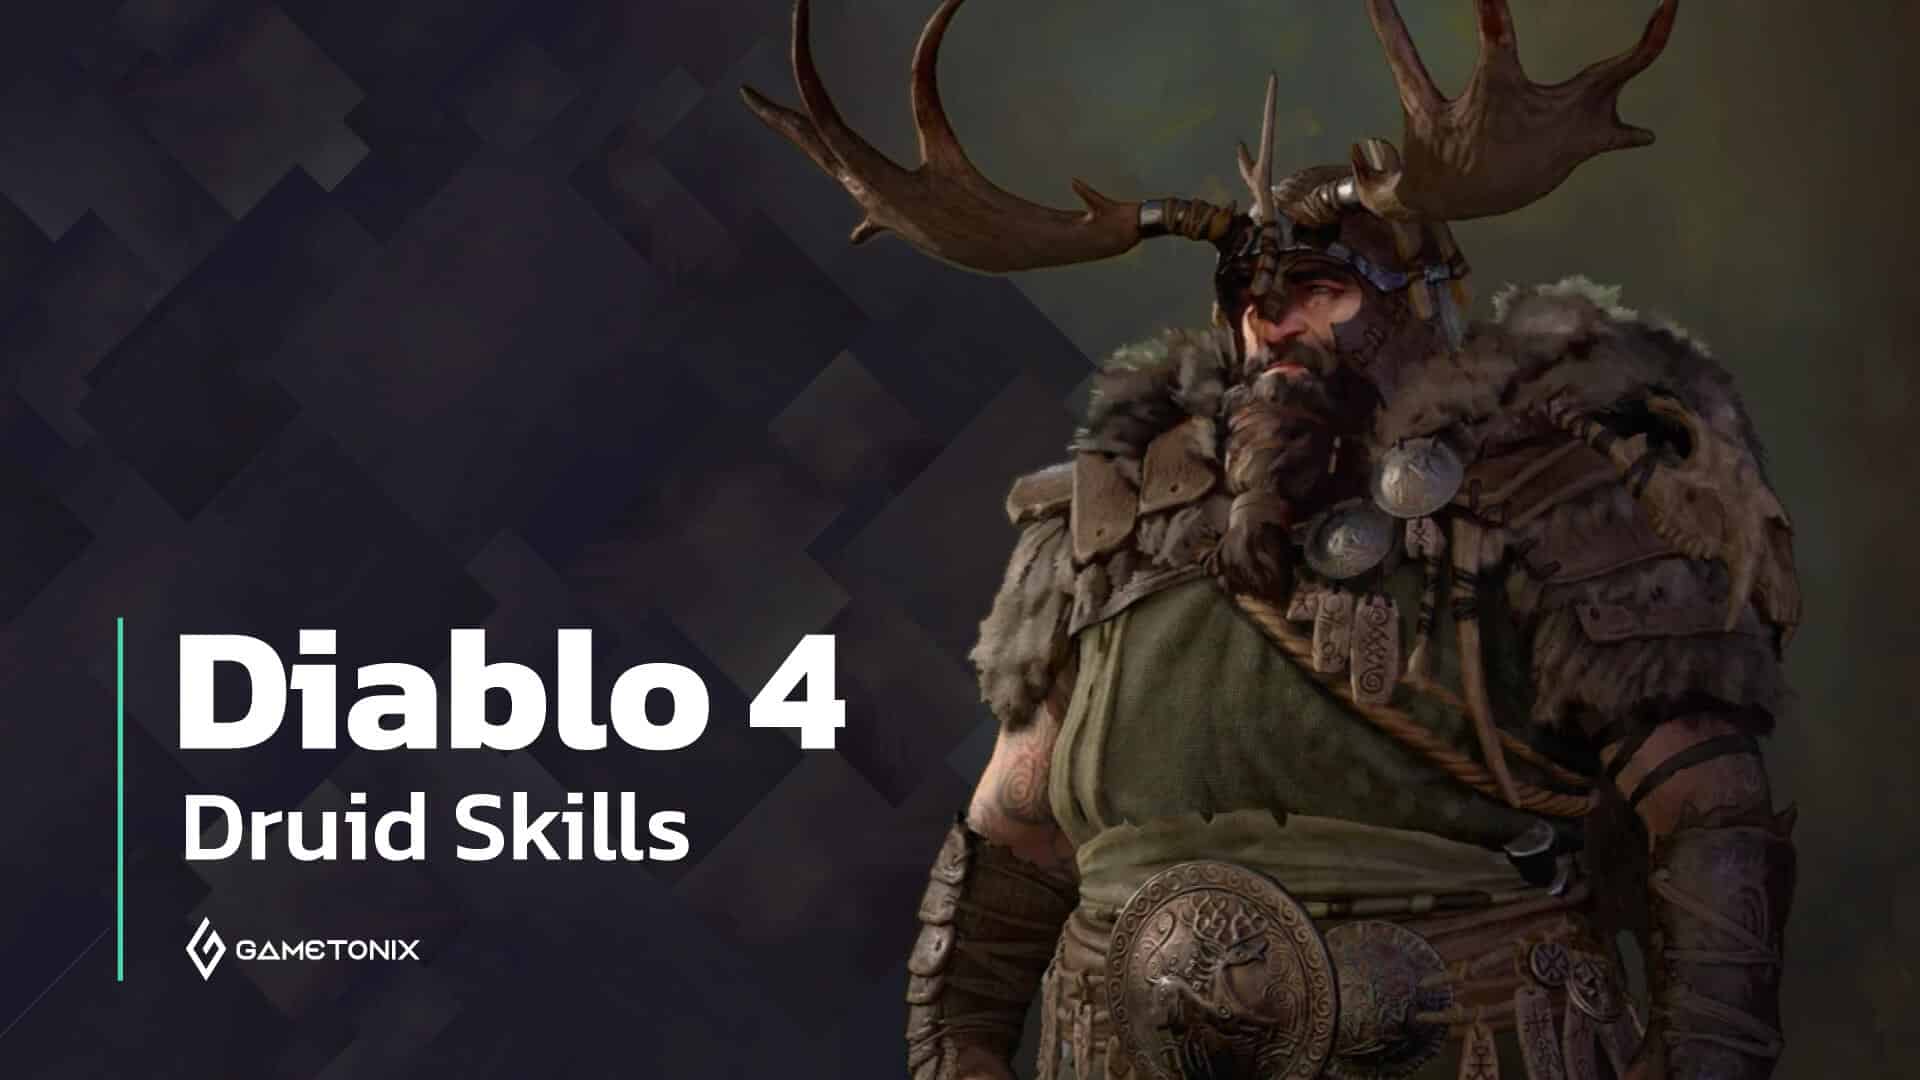 Diablo 4 Druid Class All Skills in Skill Tree สกิลอาชีพ Druid ทั้งหมด